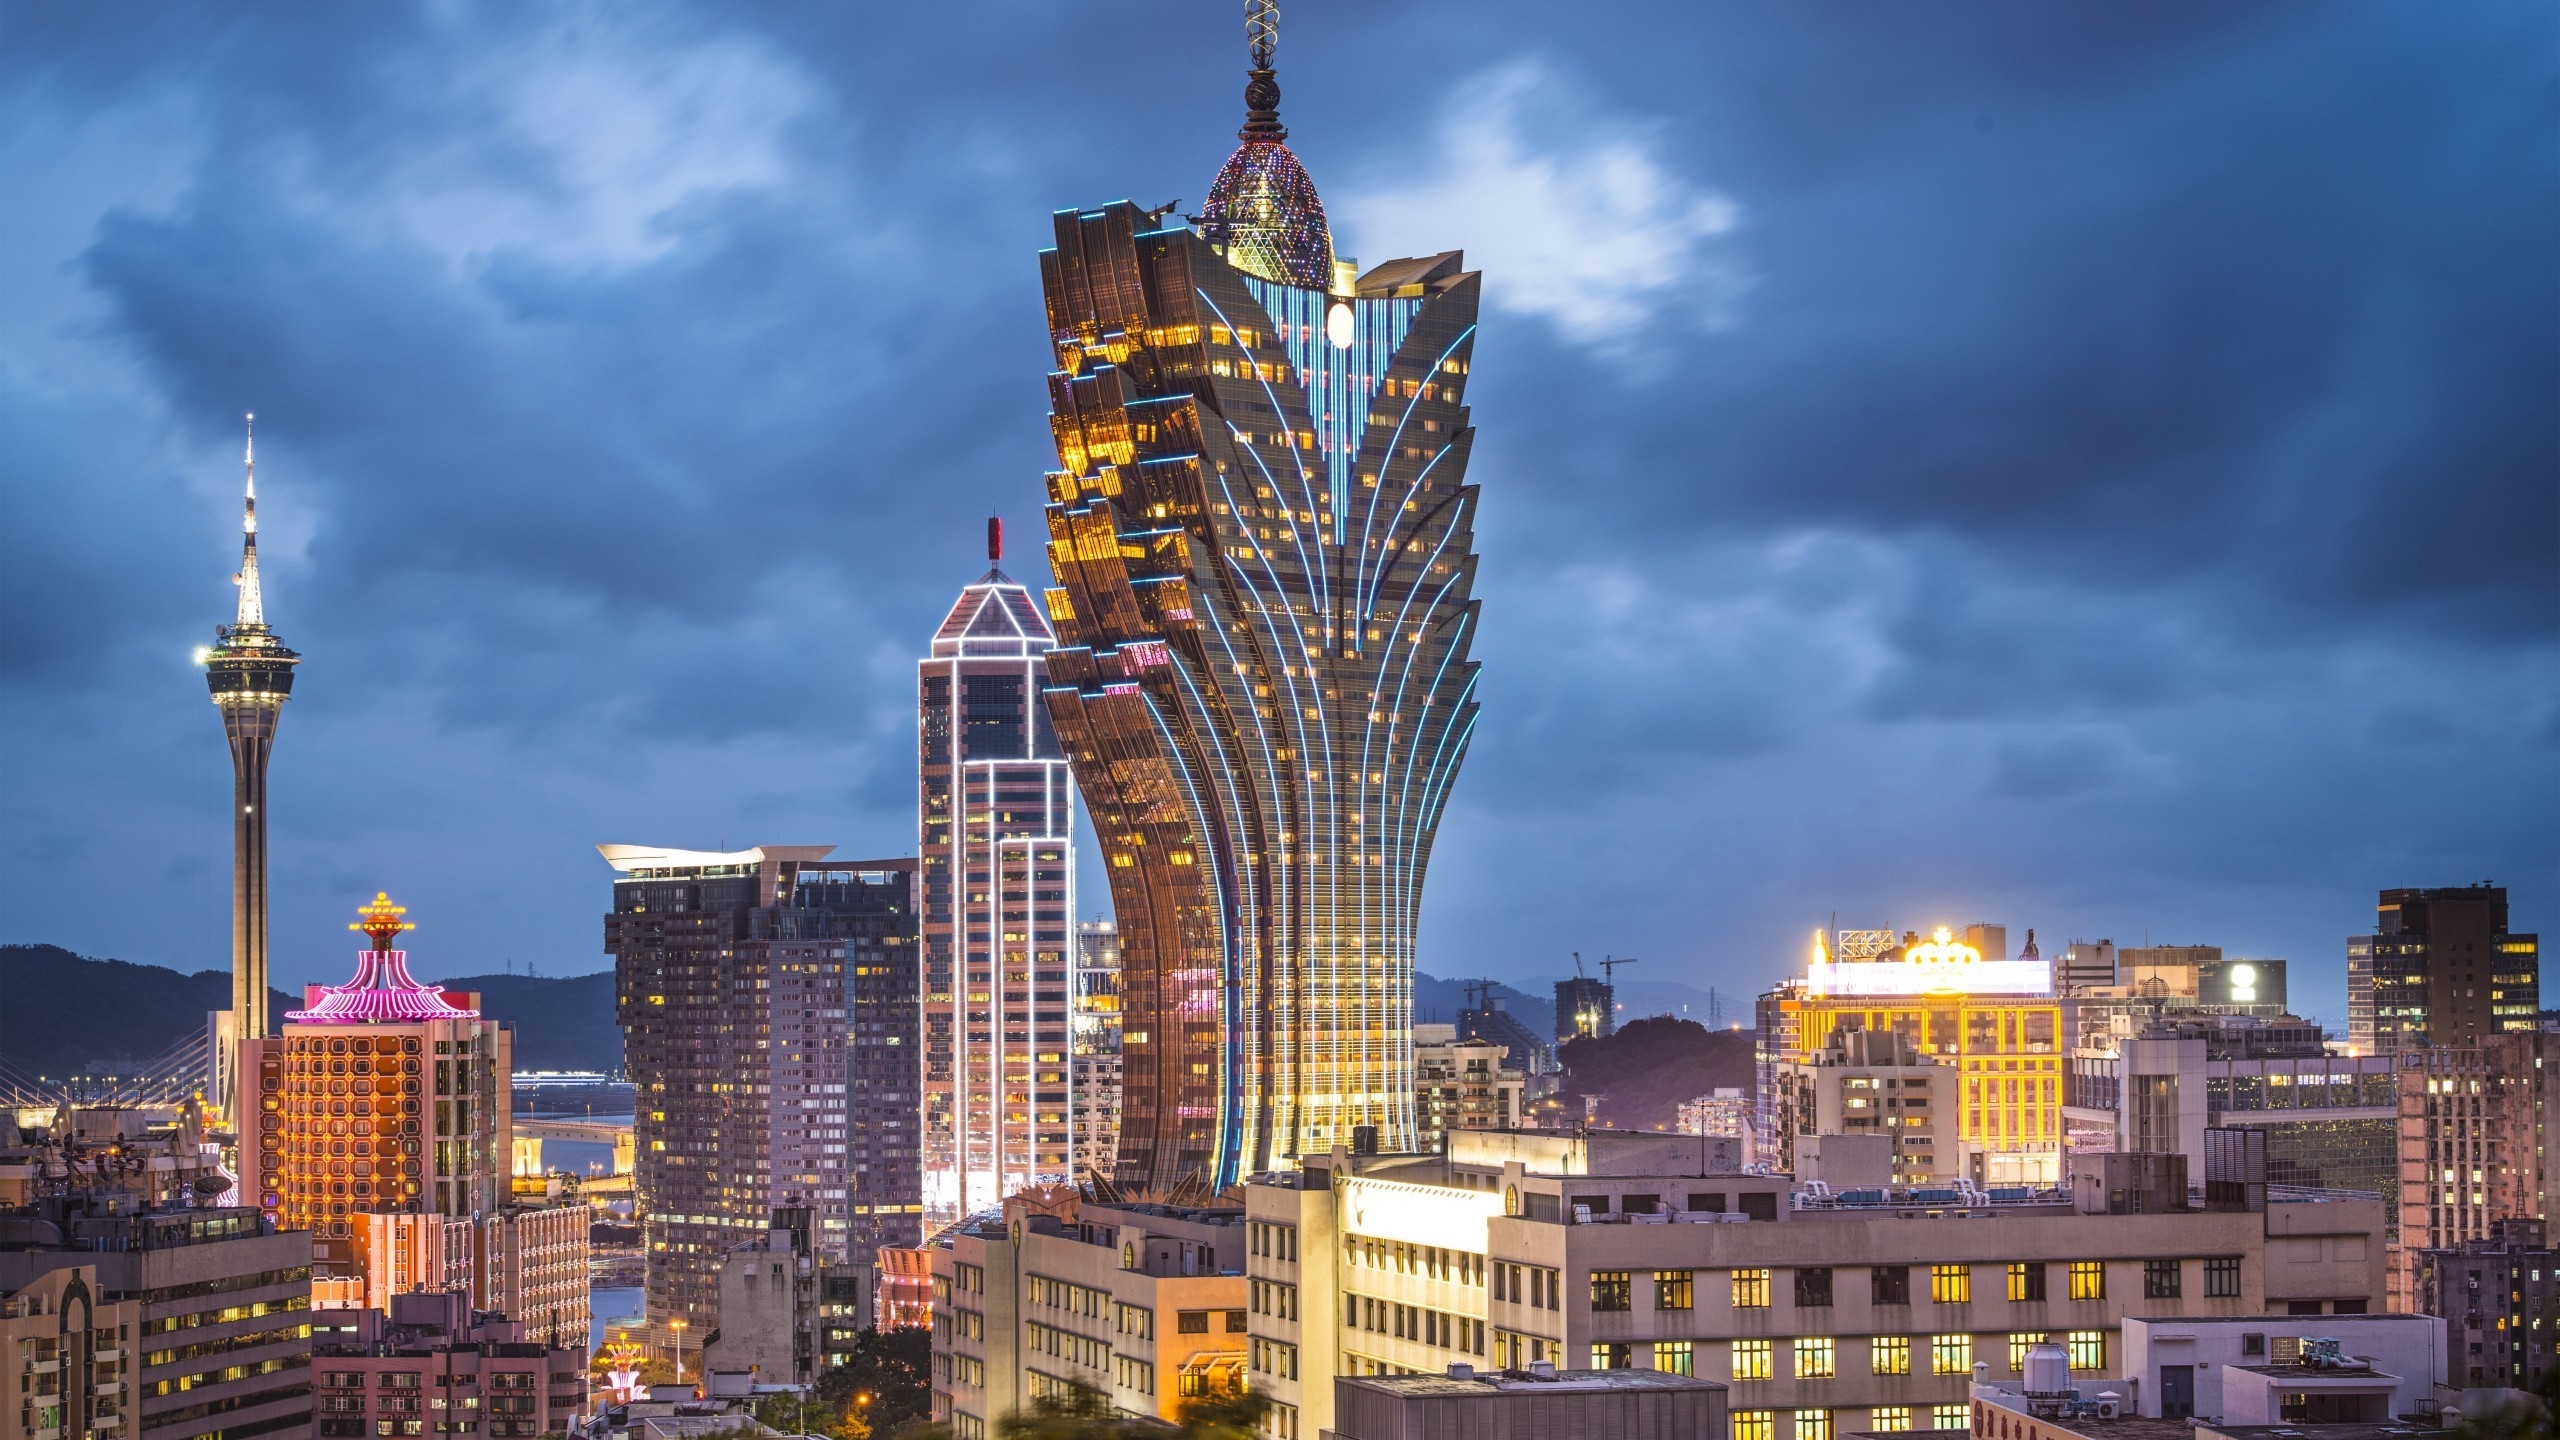 Macau Grand Lisboa Hotel for 2560x1440 HDTV resolution